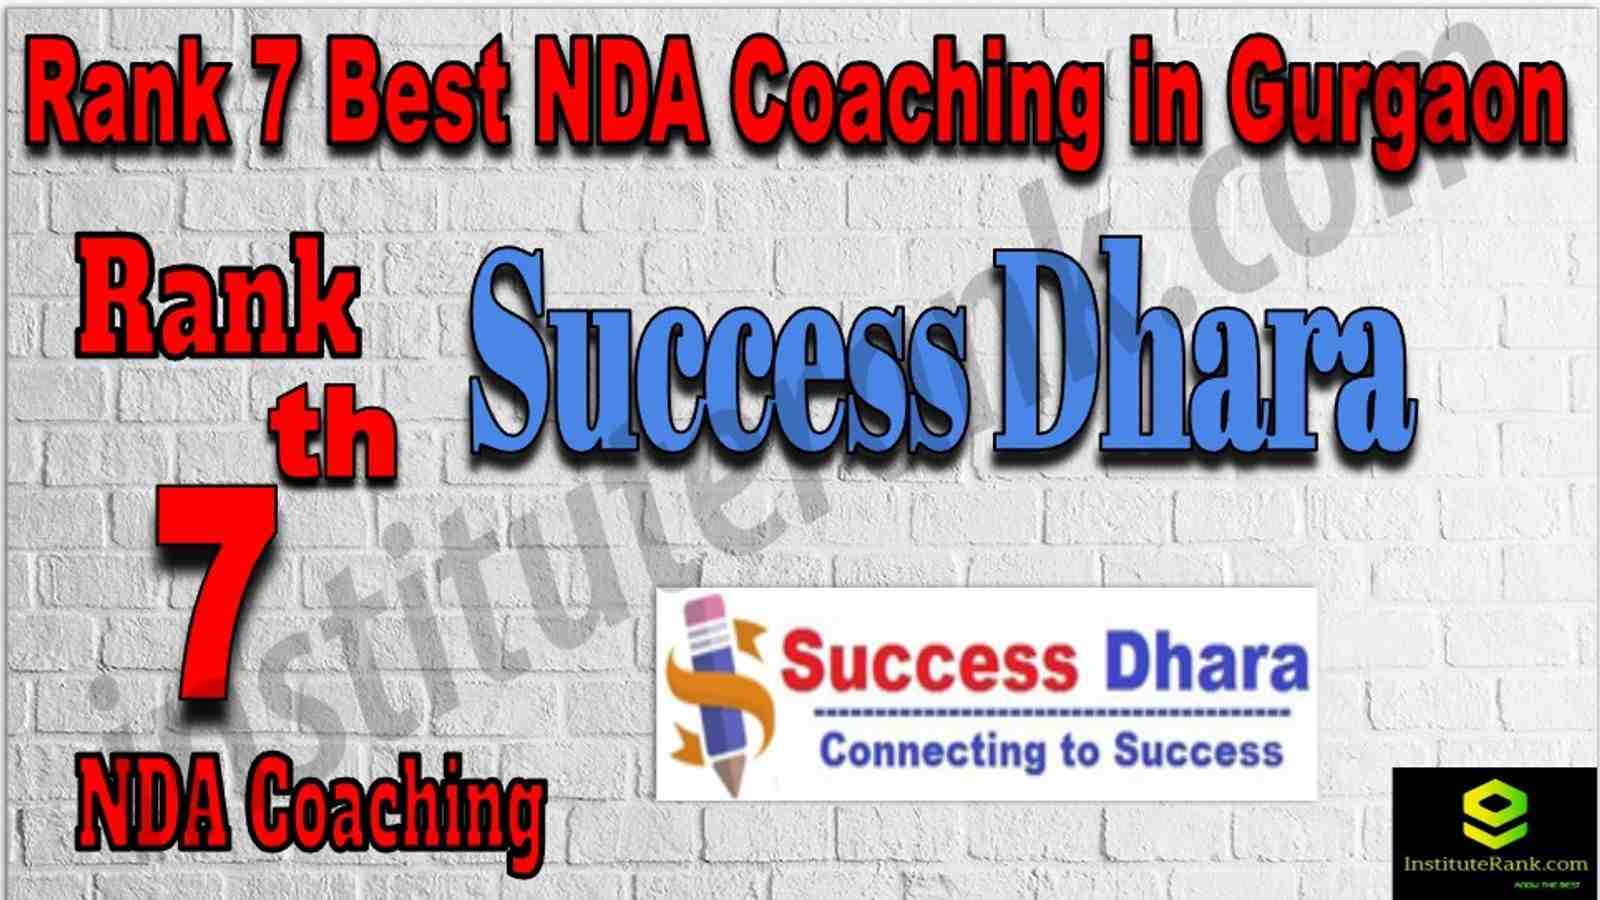 Success Dhara NDA Coaching in Gurgaon. Rank 7 NDA Coaching in Gurgaon. Best NDA Coaching in Gurgaon